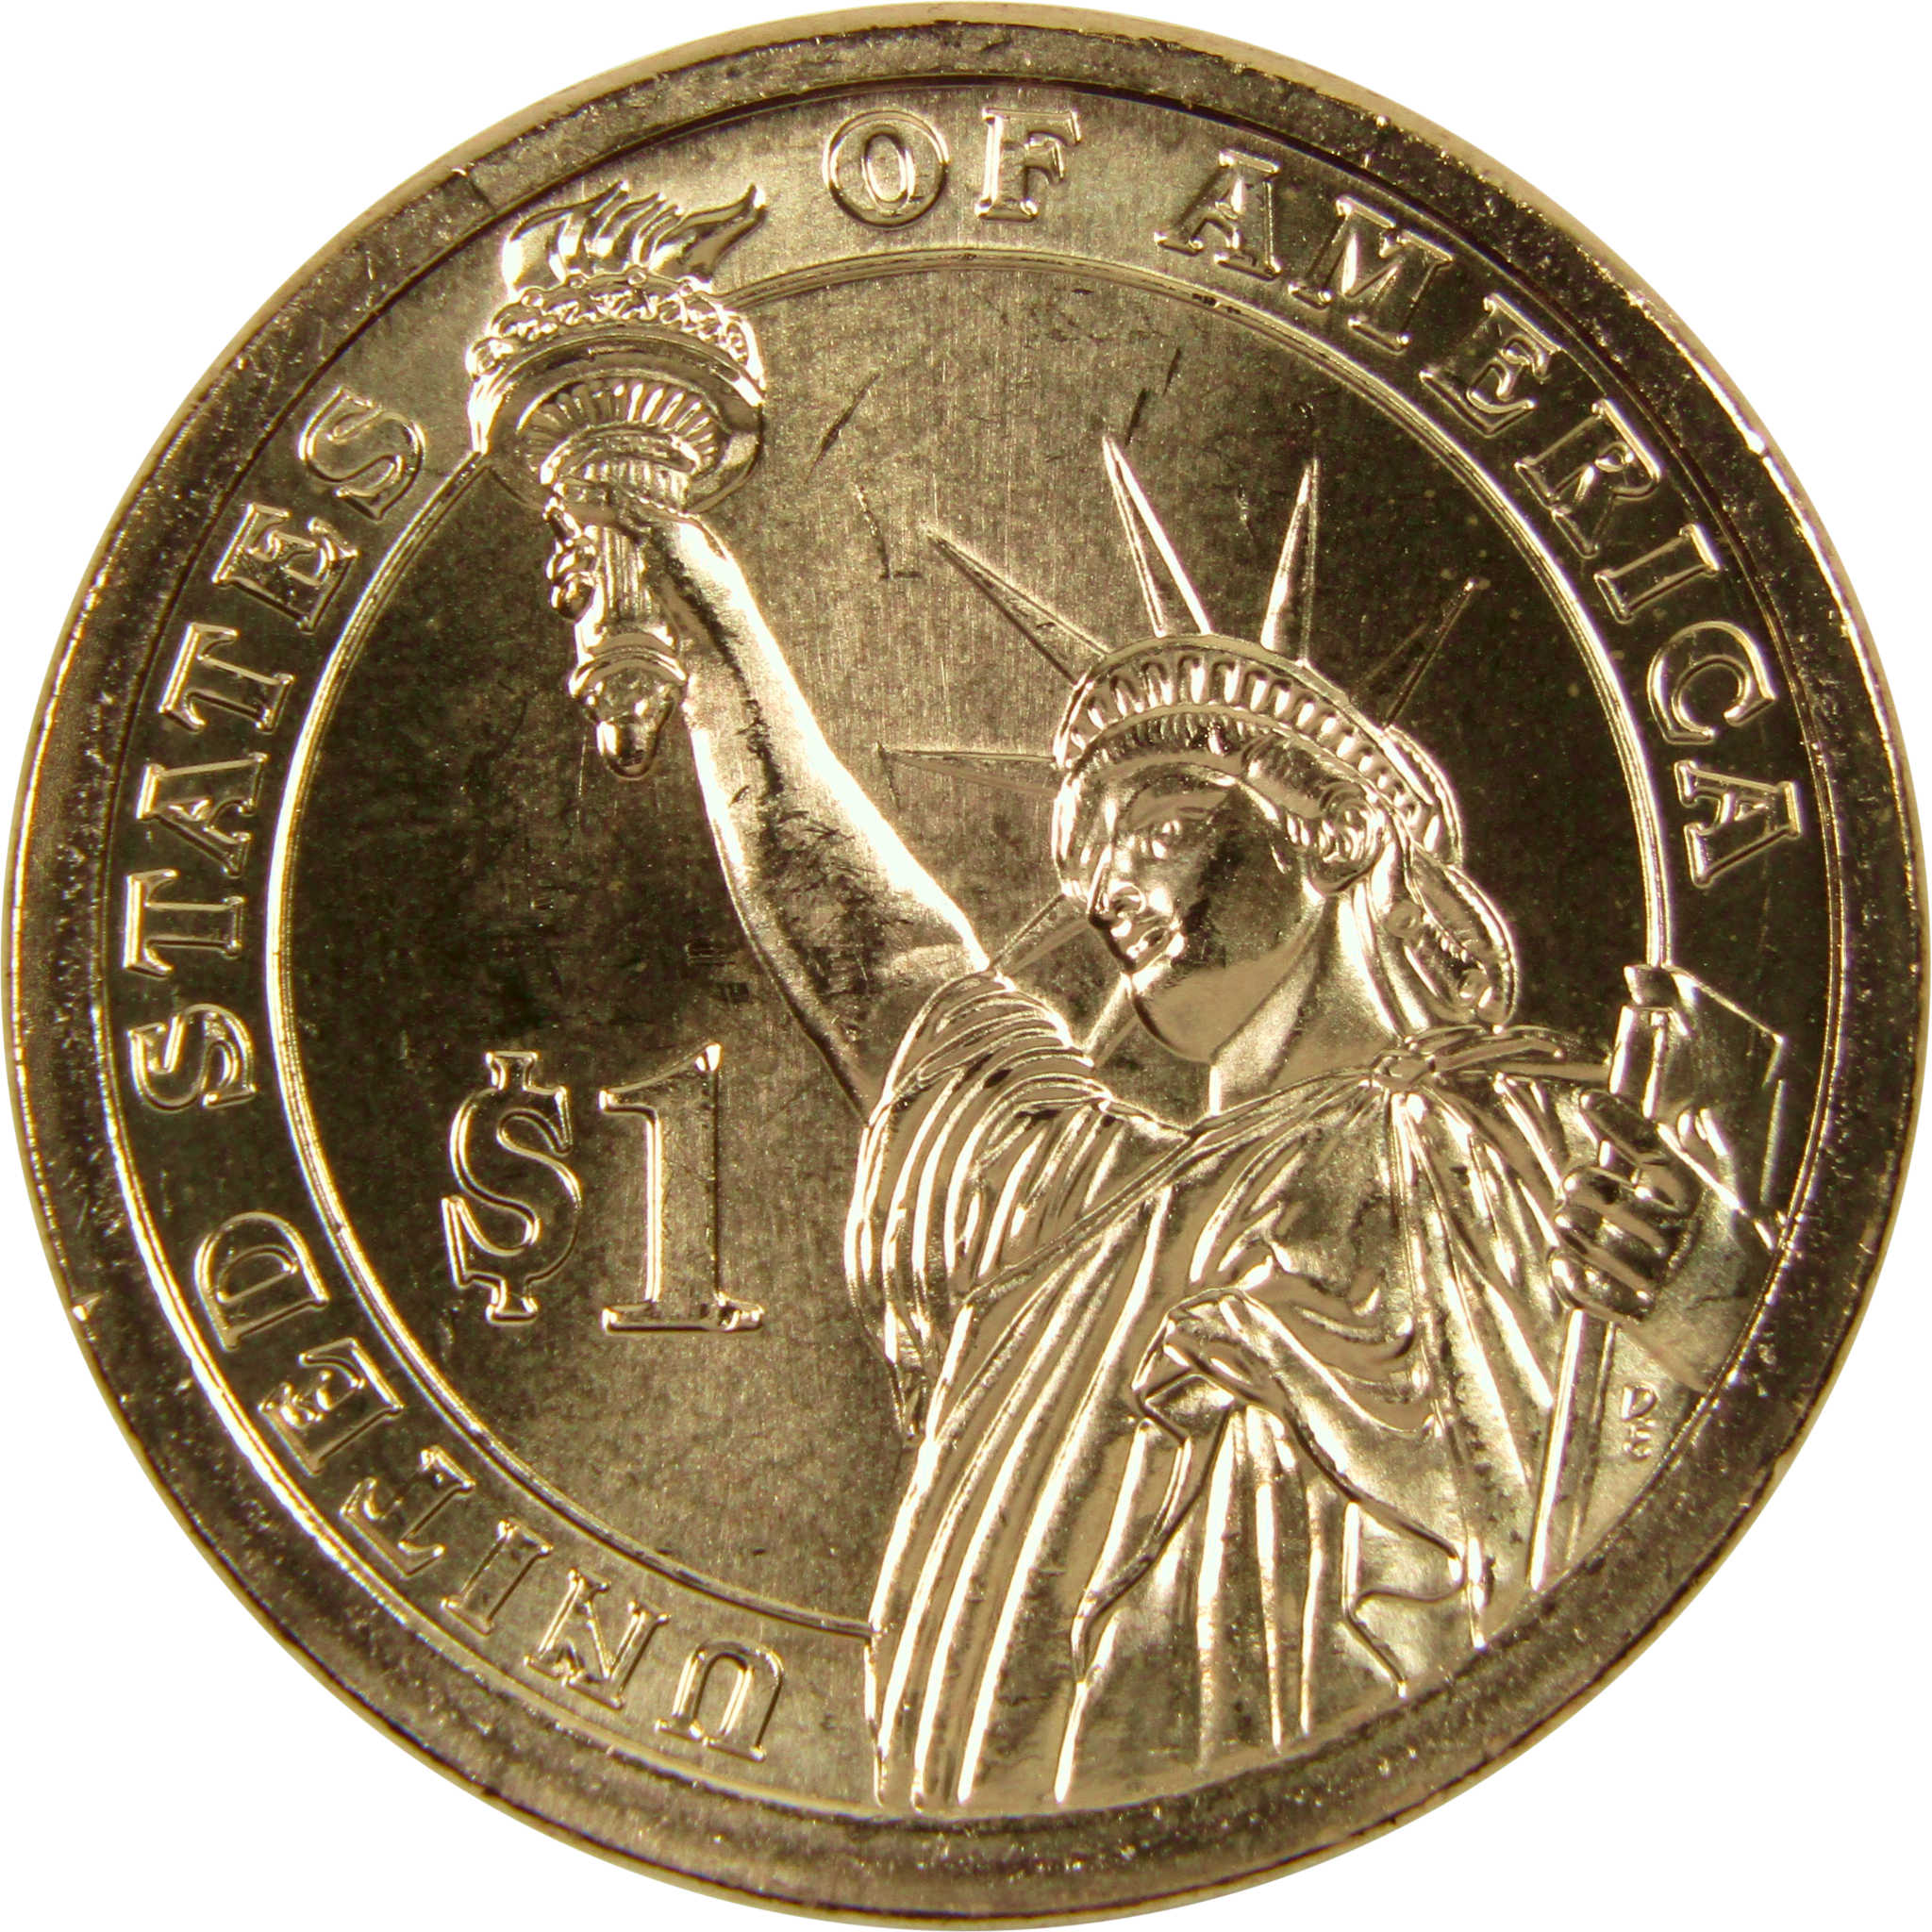 2012 P Benjamin Harrison Presidential Dollar BU Uncirculated $1 Coin